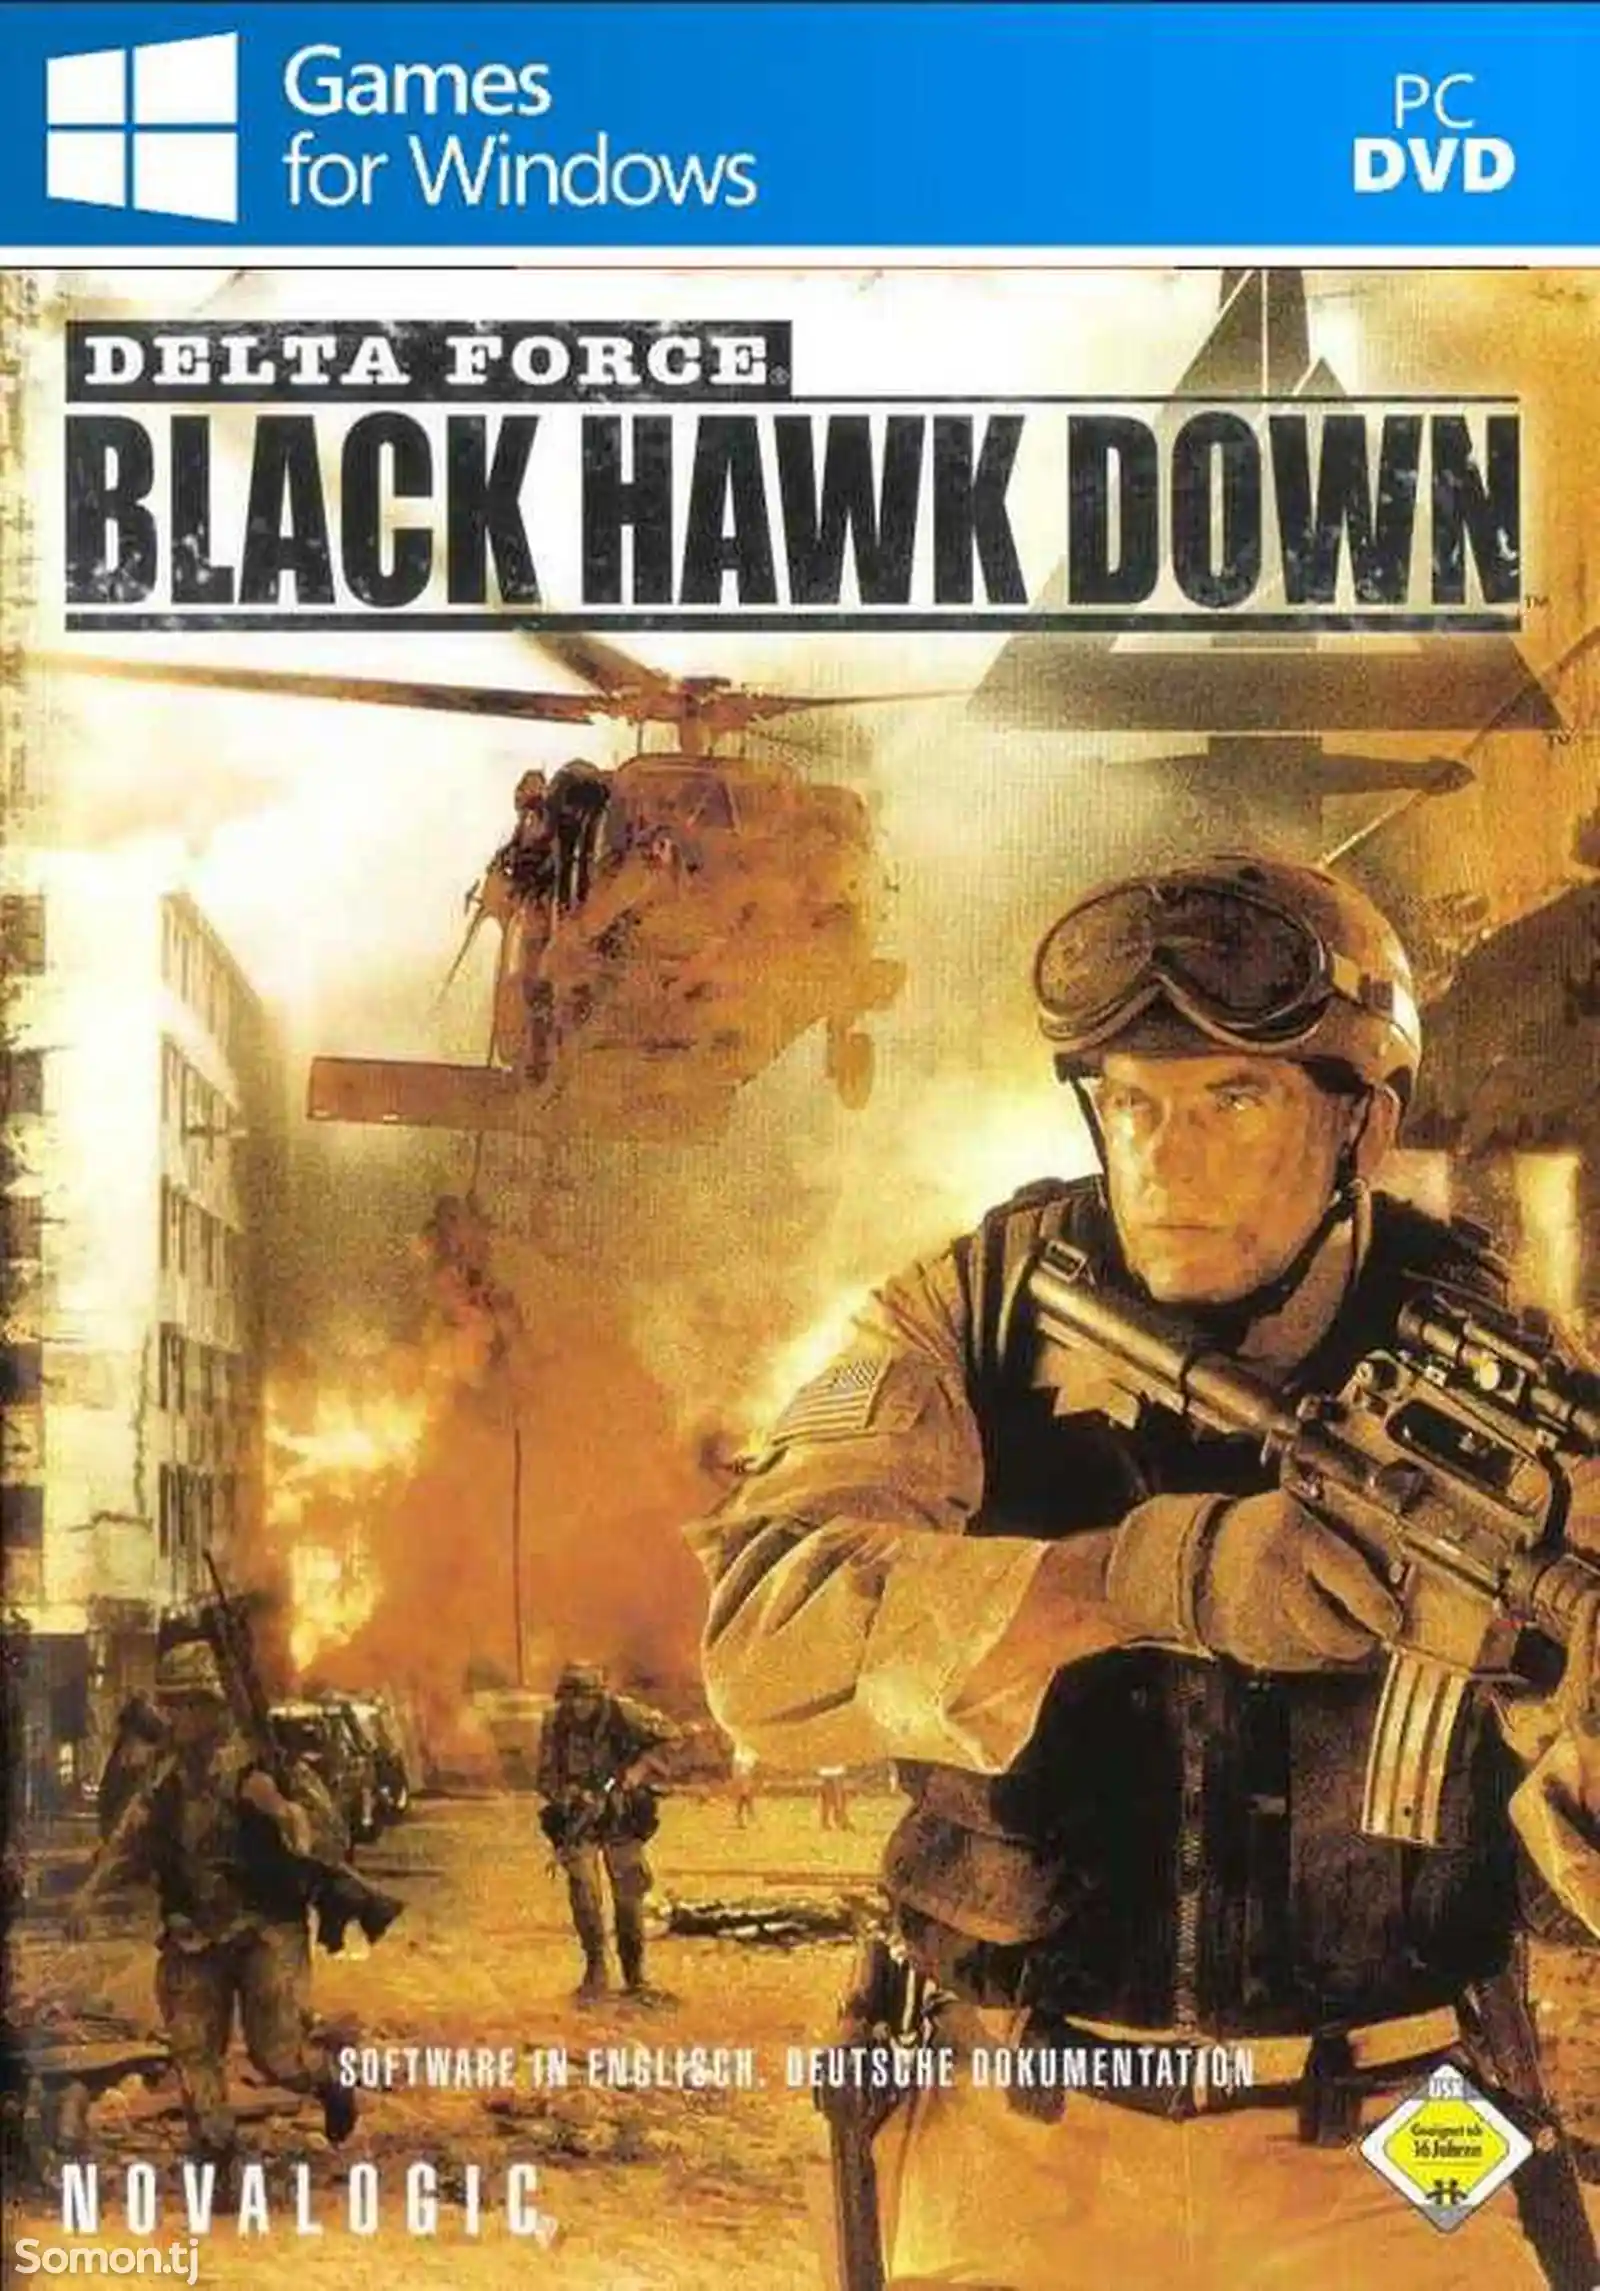 Игра Delta force Black hawk down компьютера-пк-pc-1